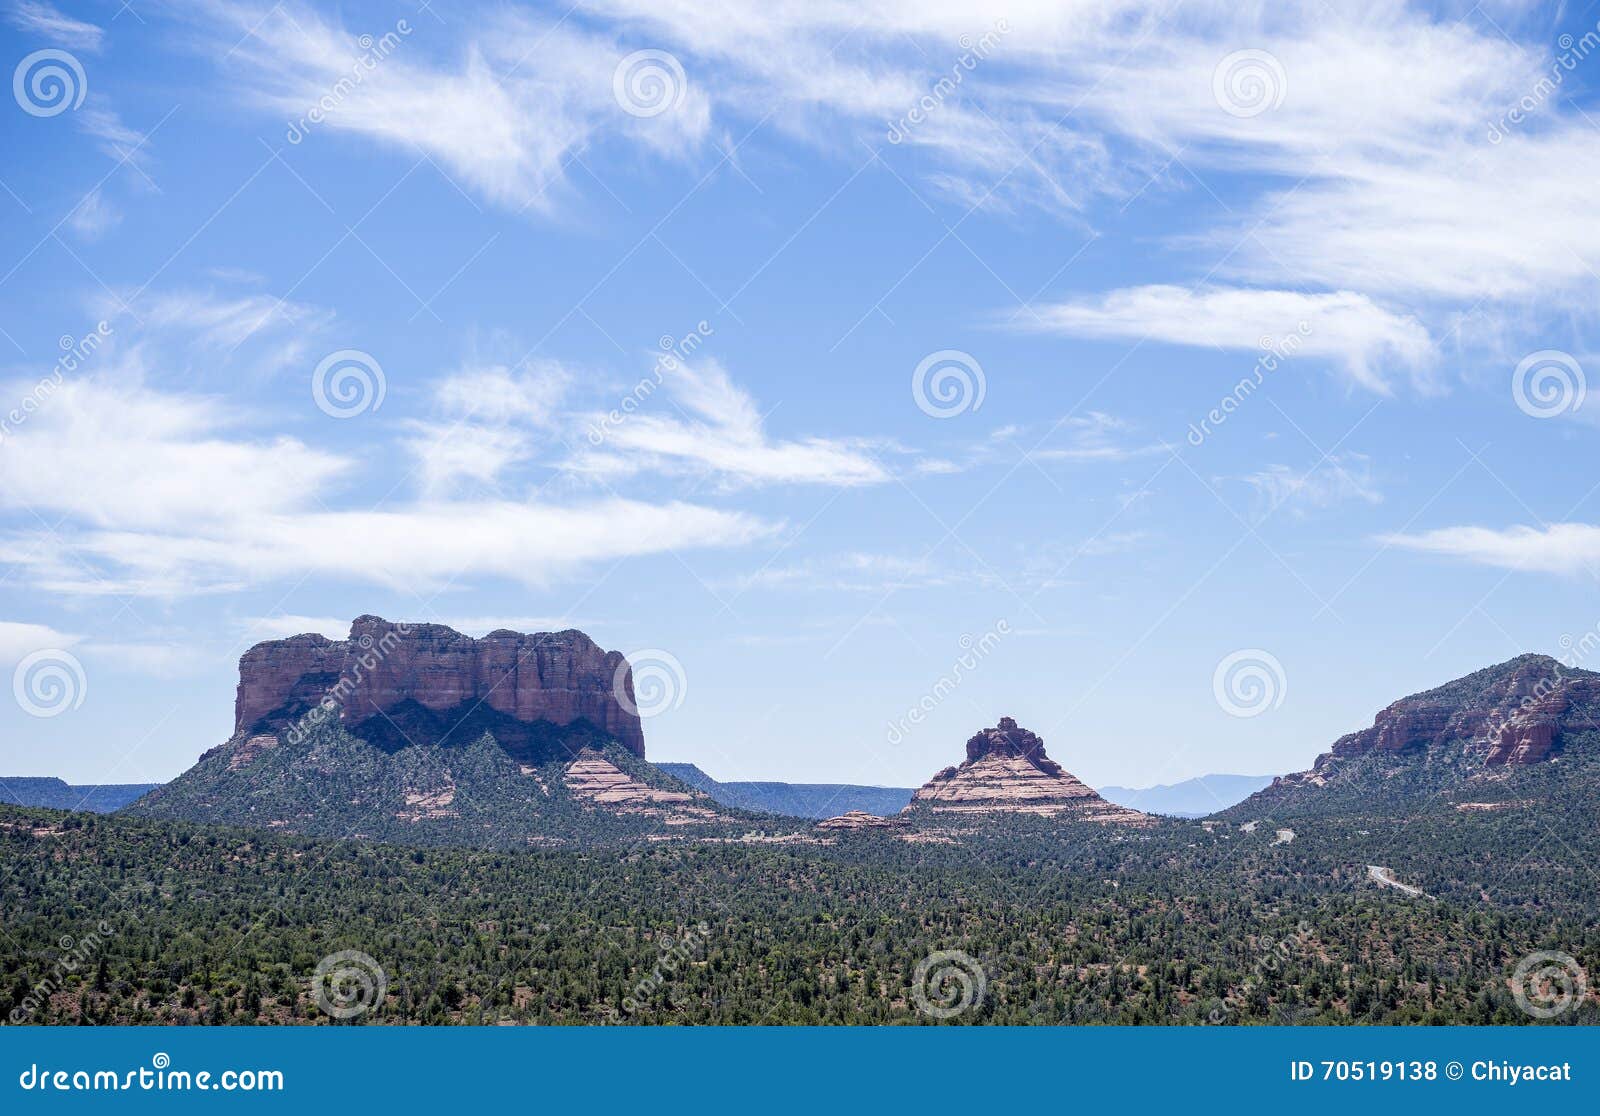 beautiful vistas of sedona arizona #4